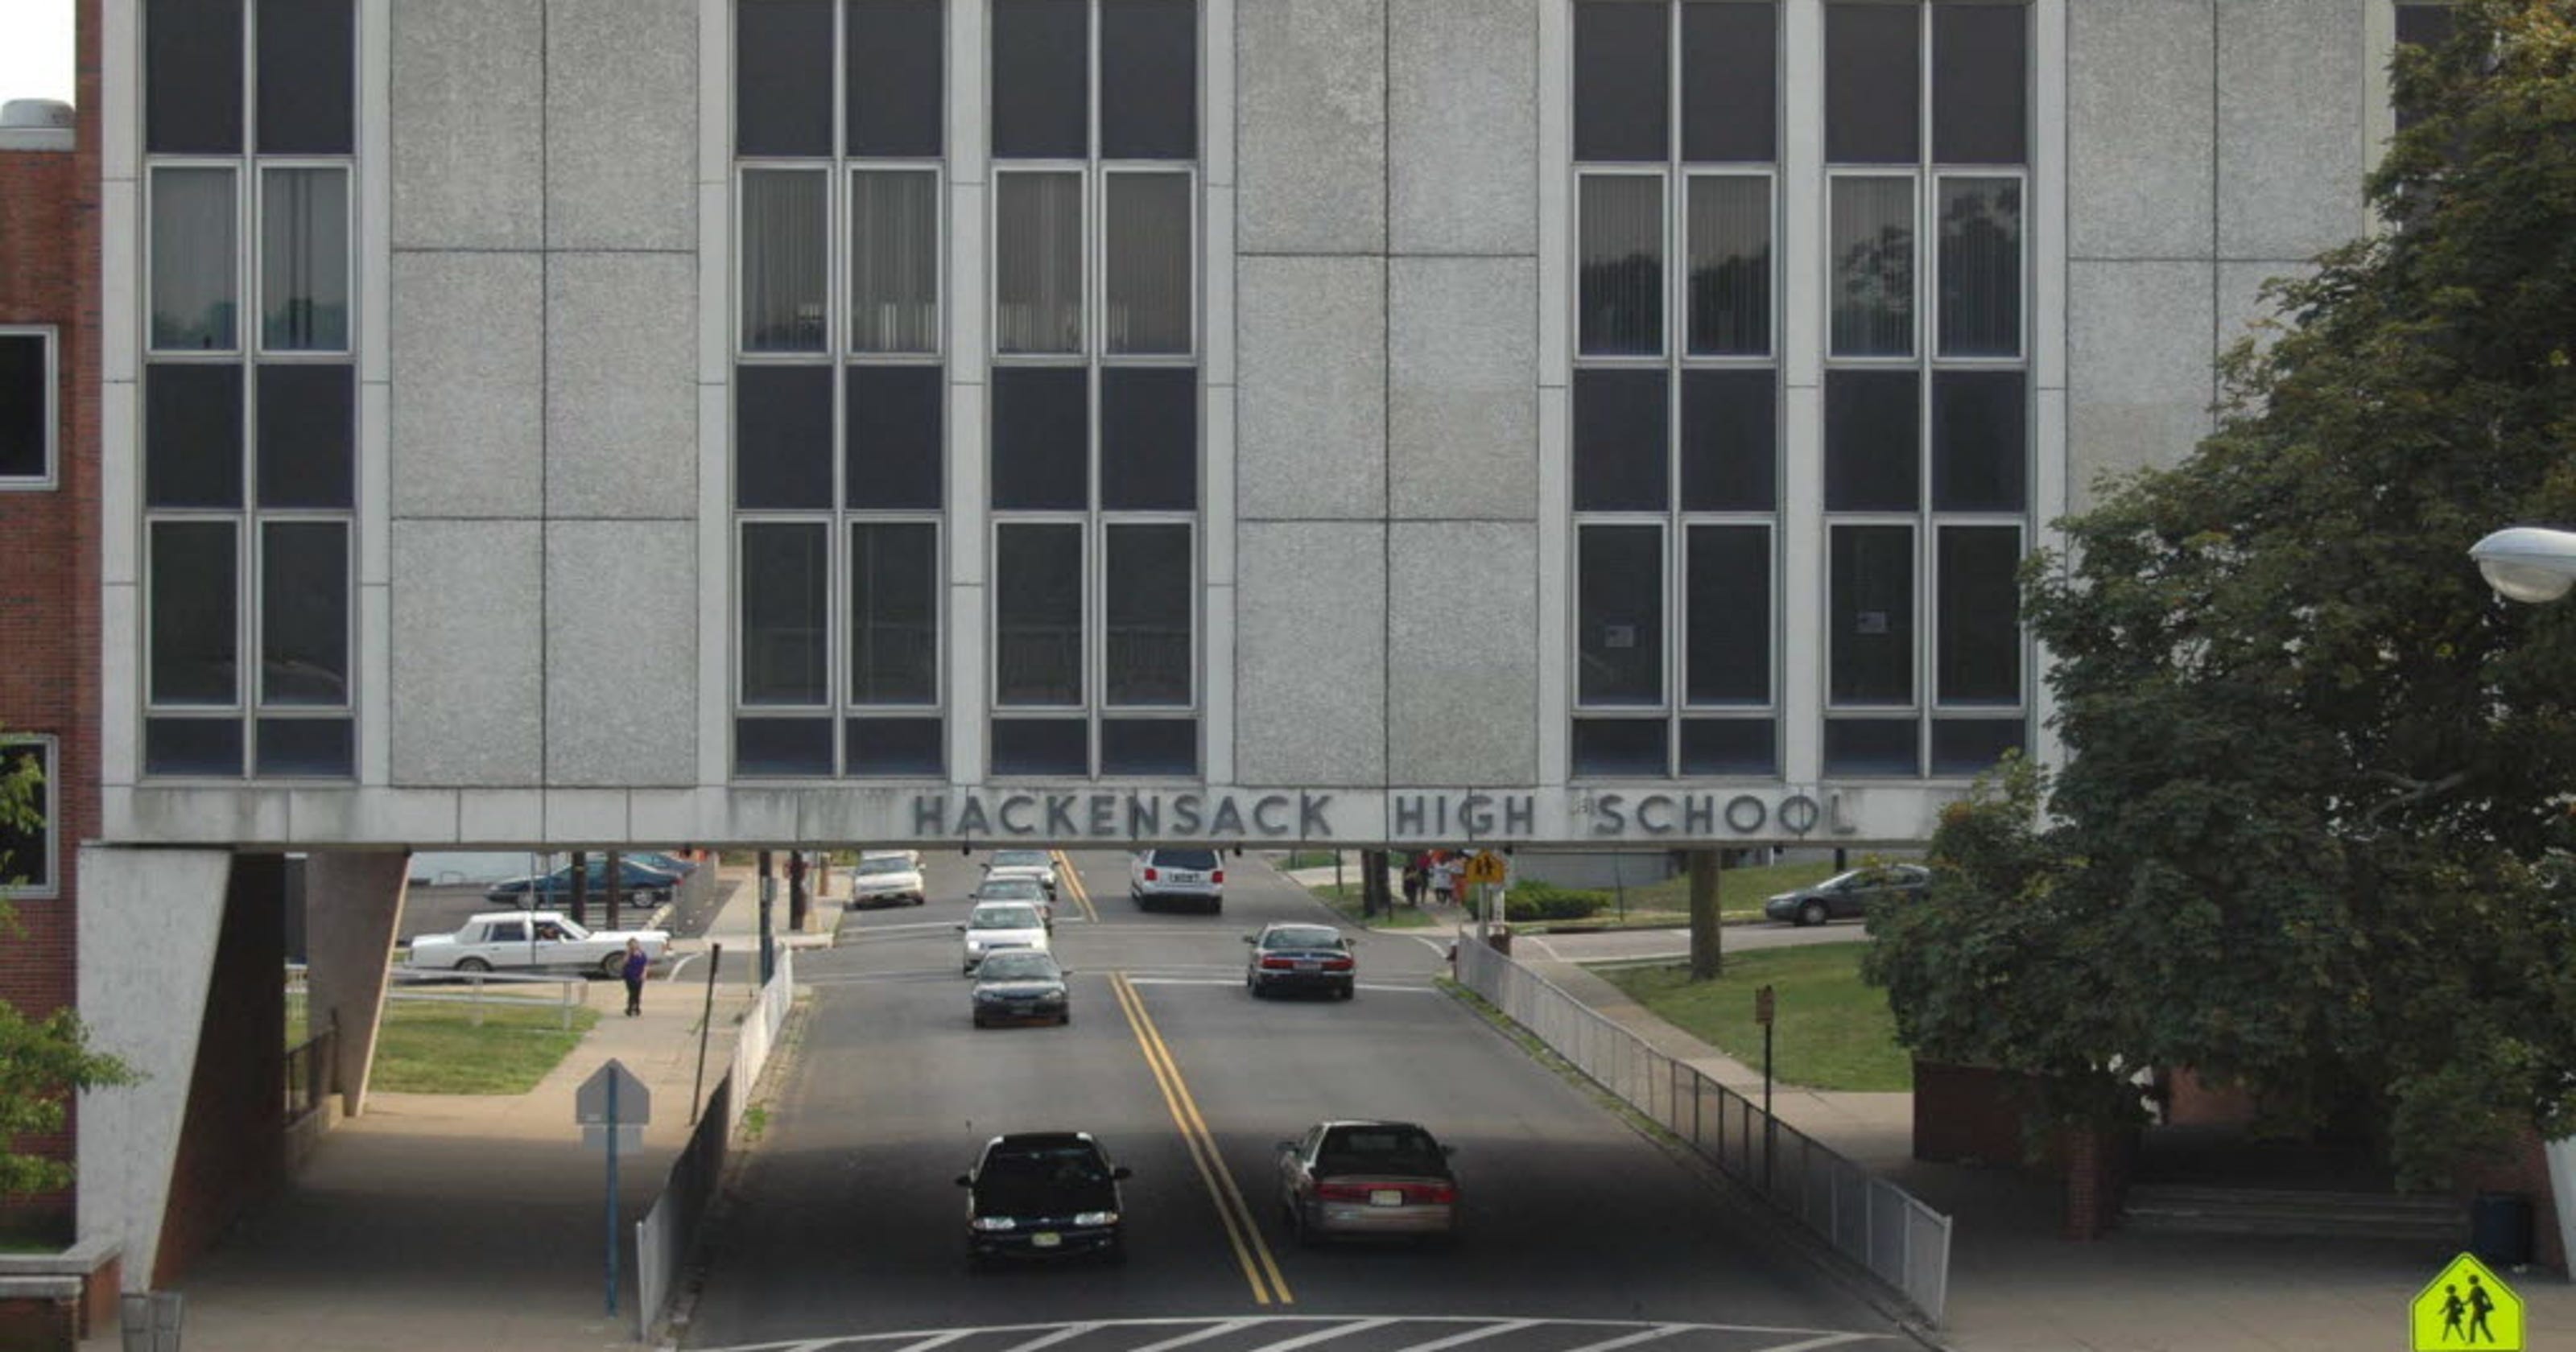 Hackensack NJ school election BOE president to run with Smart Schools